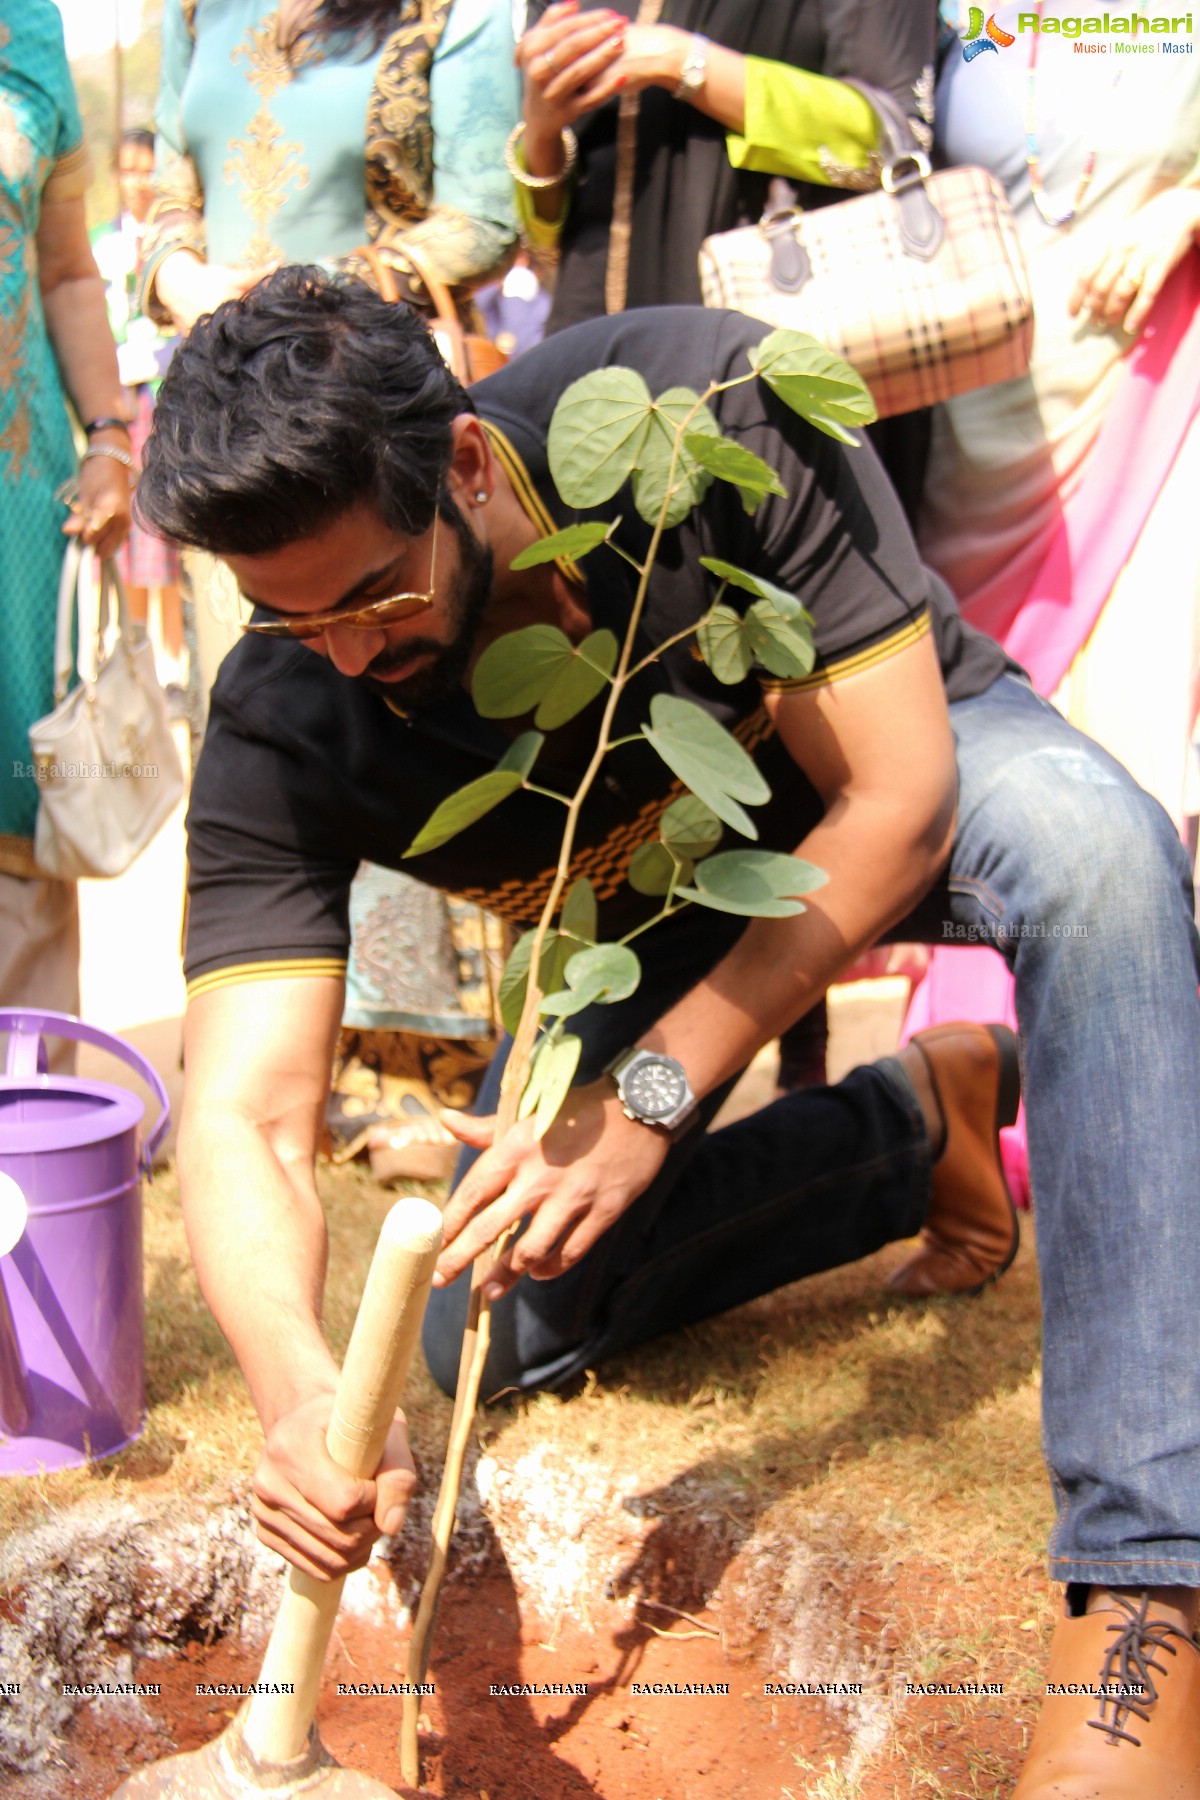 FICCI Event - A Go Green Initiative with Rana Daggubati, Hyderabad